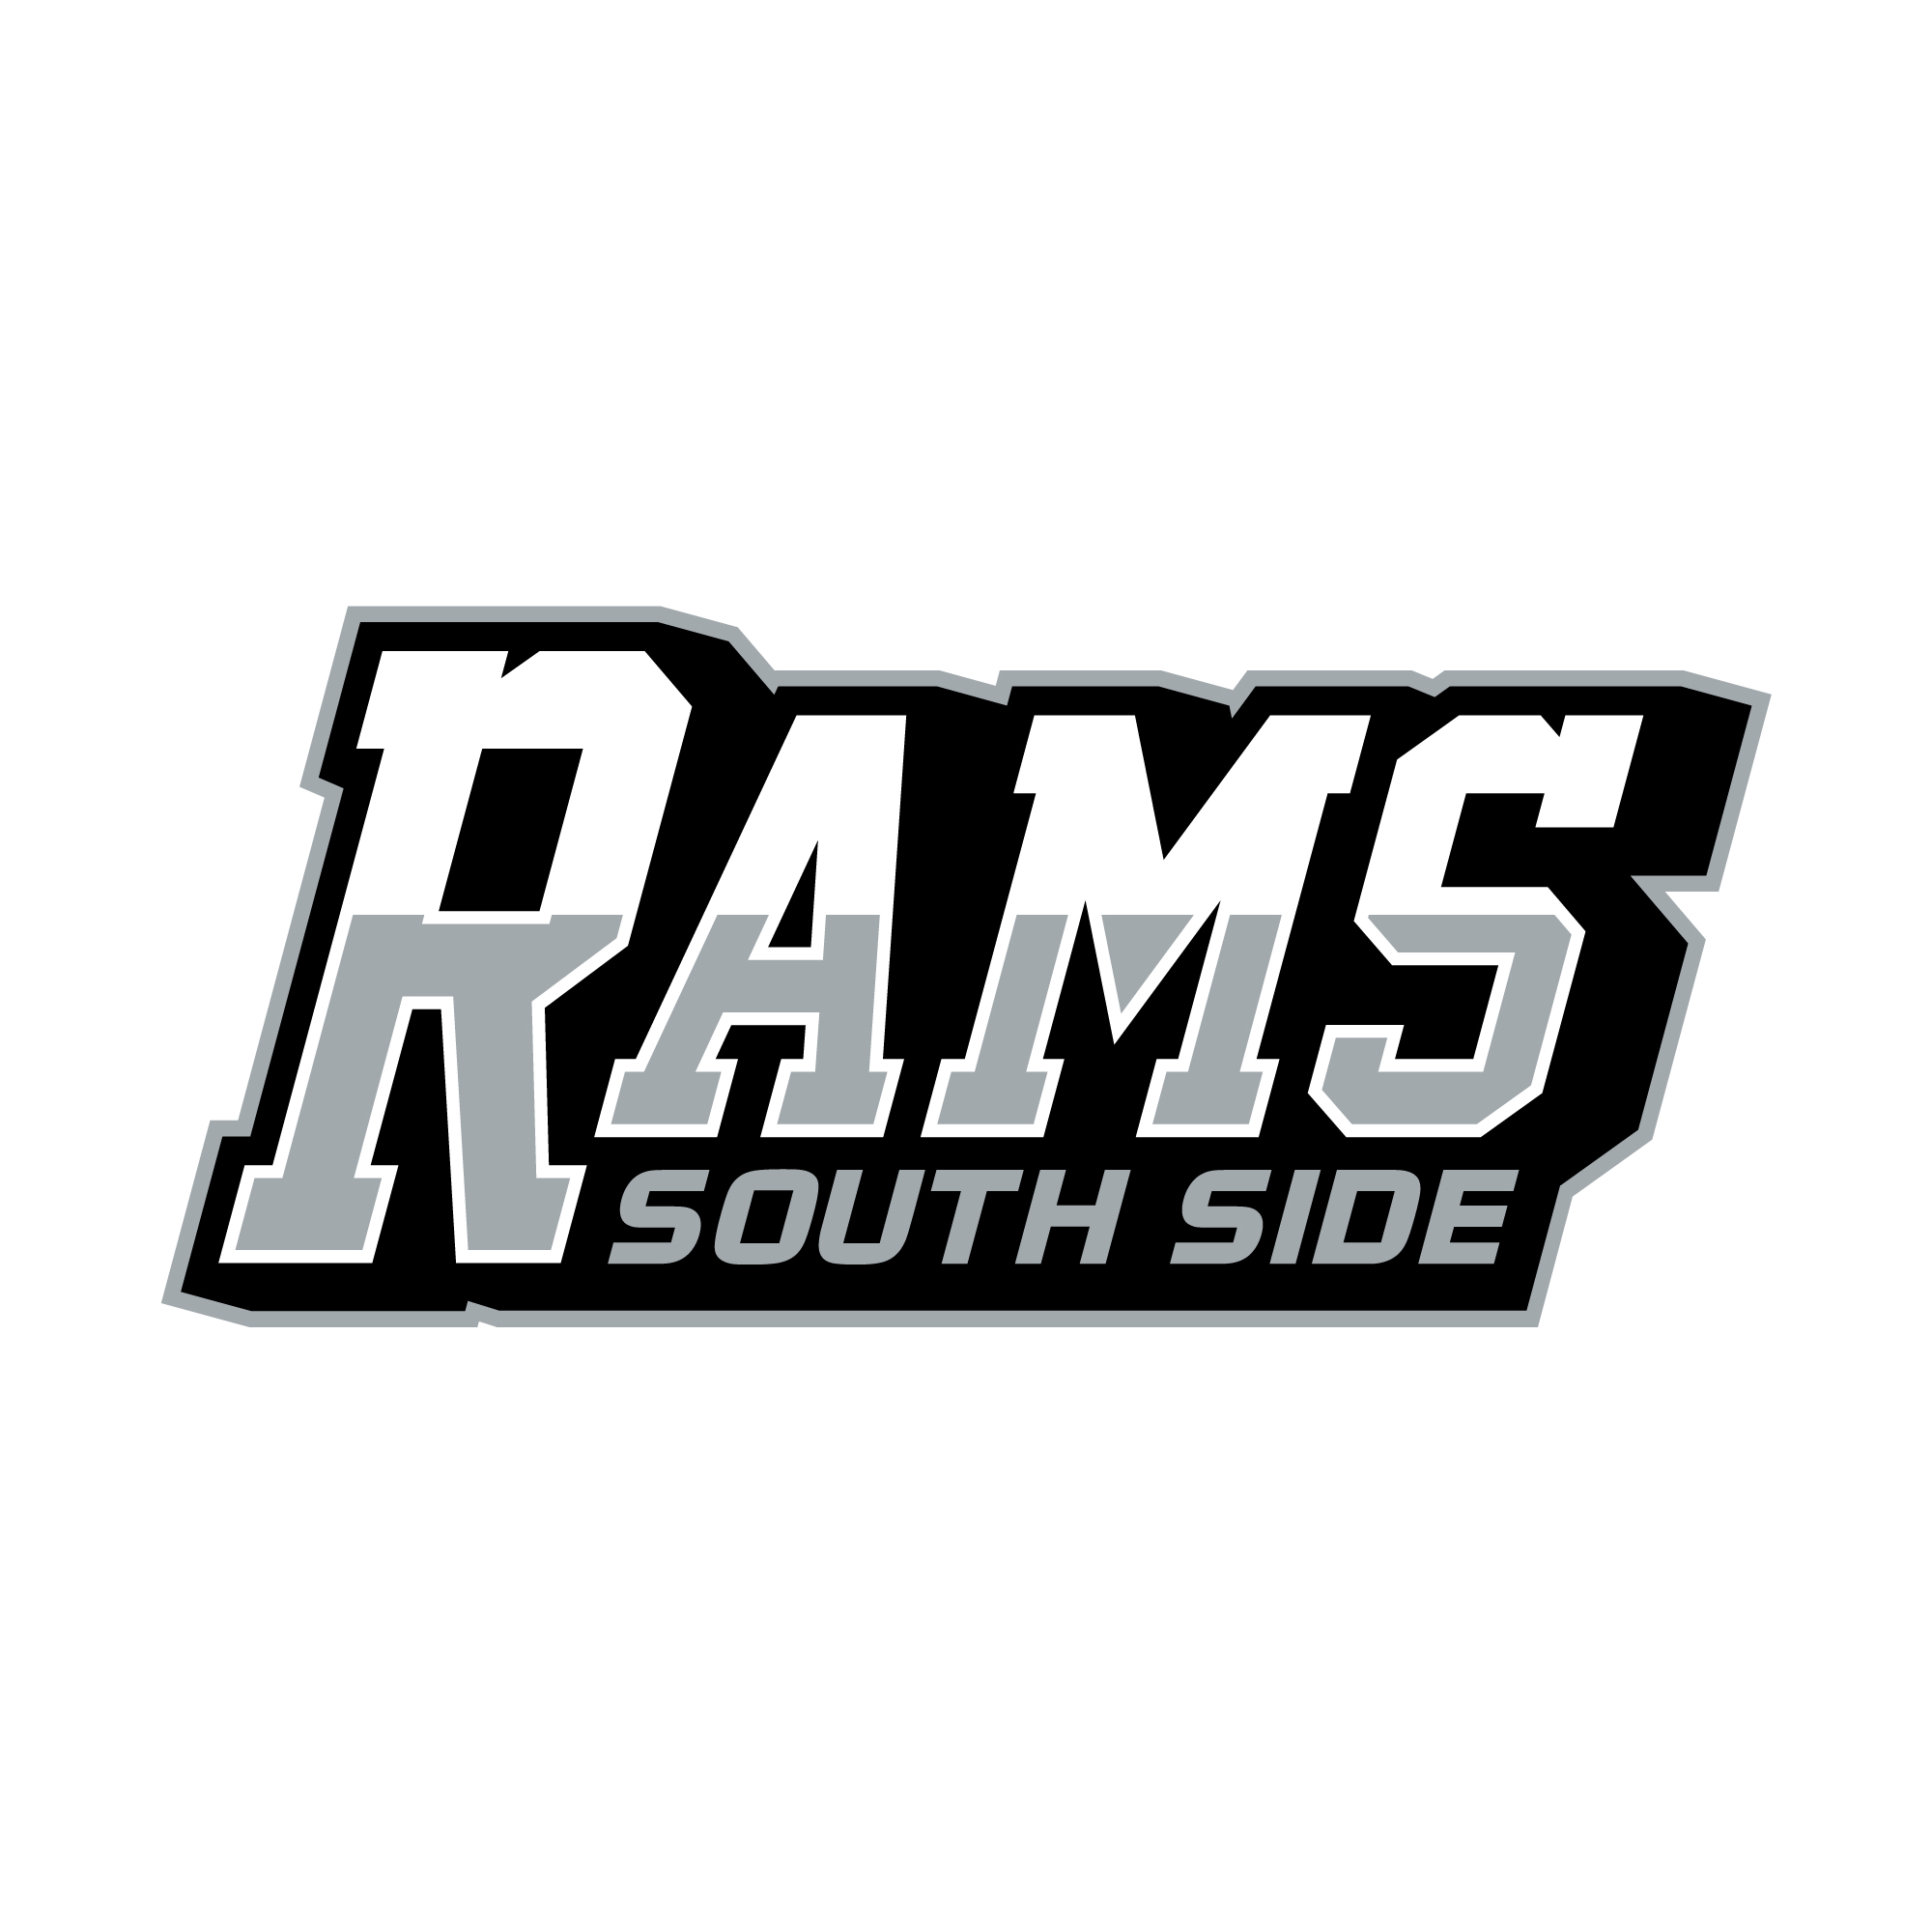 SS Rams logo